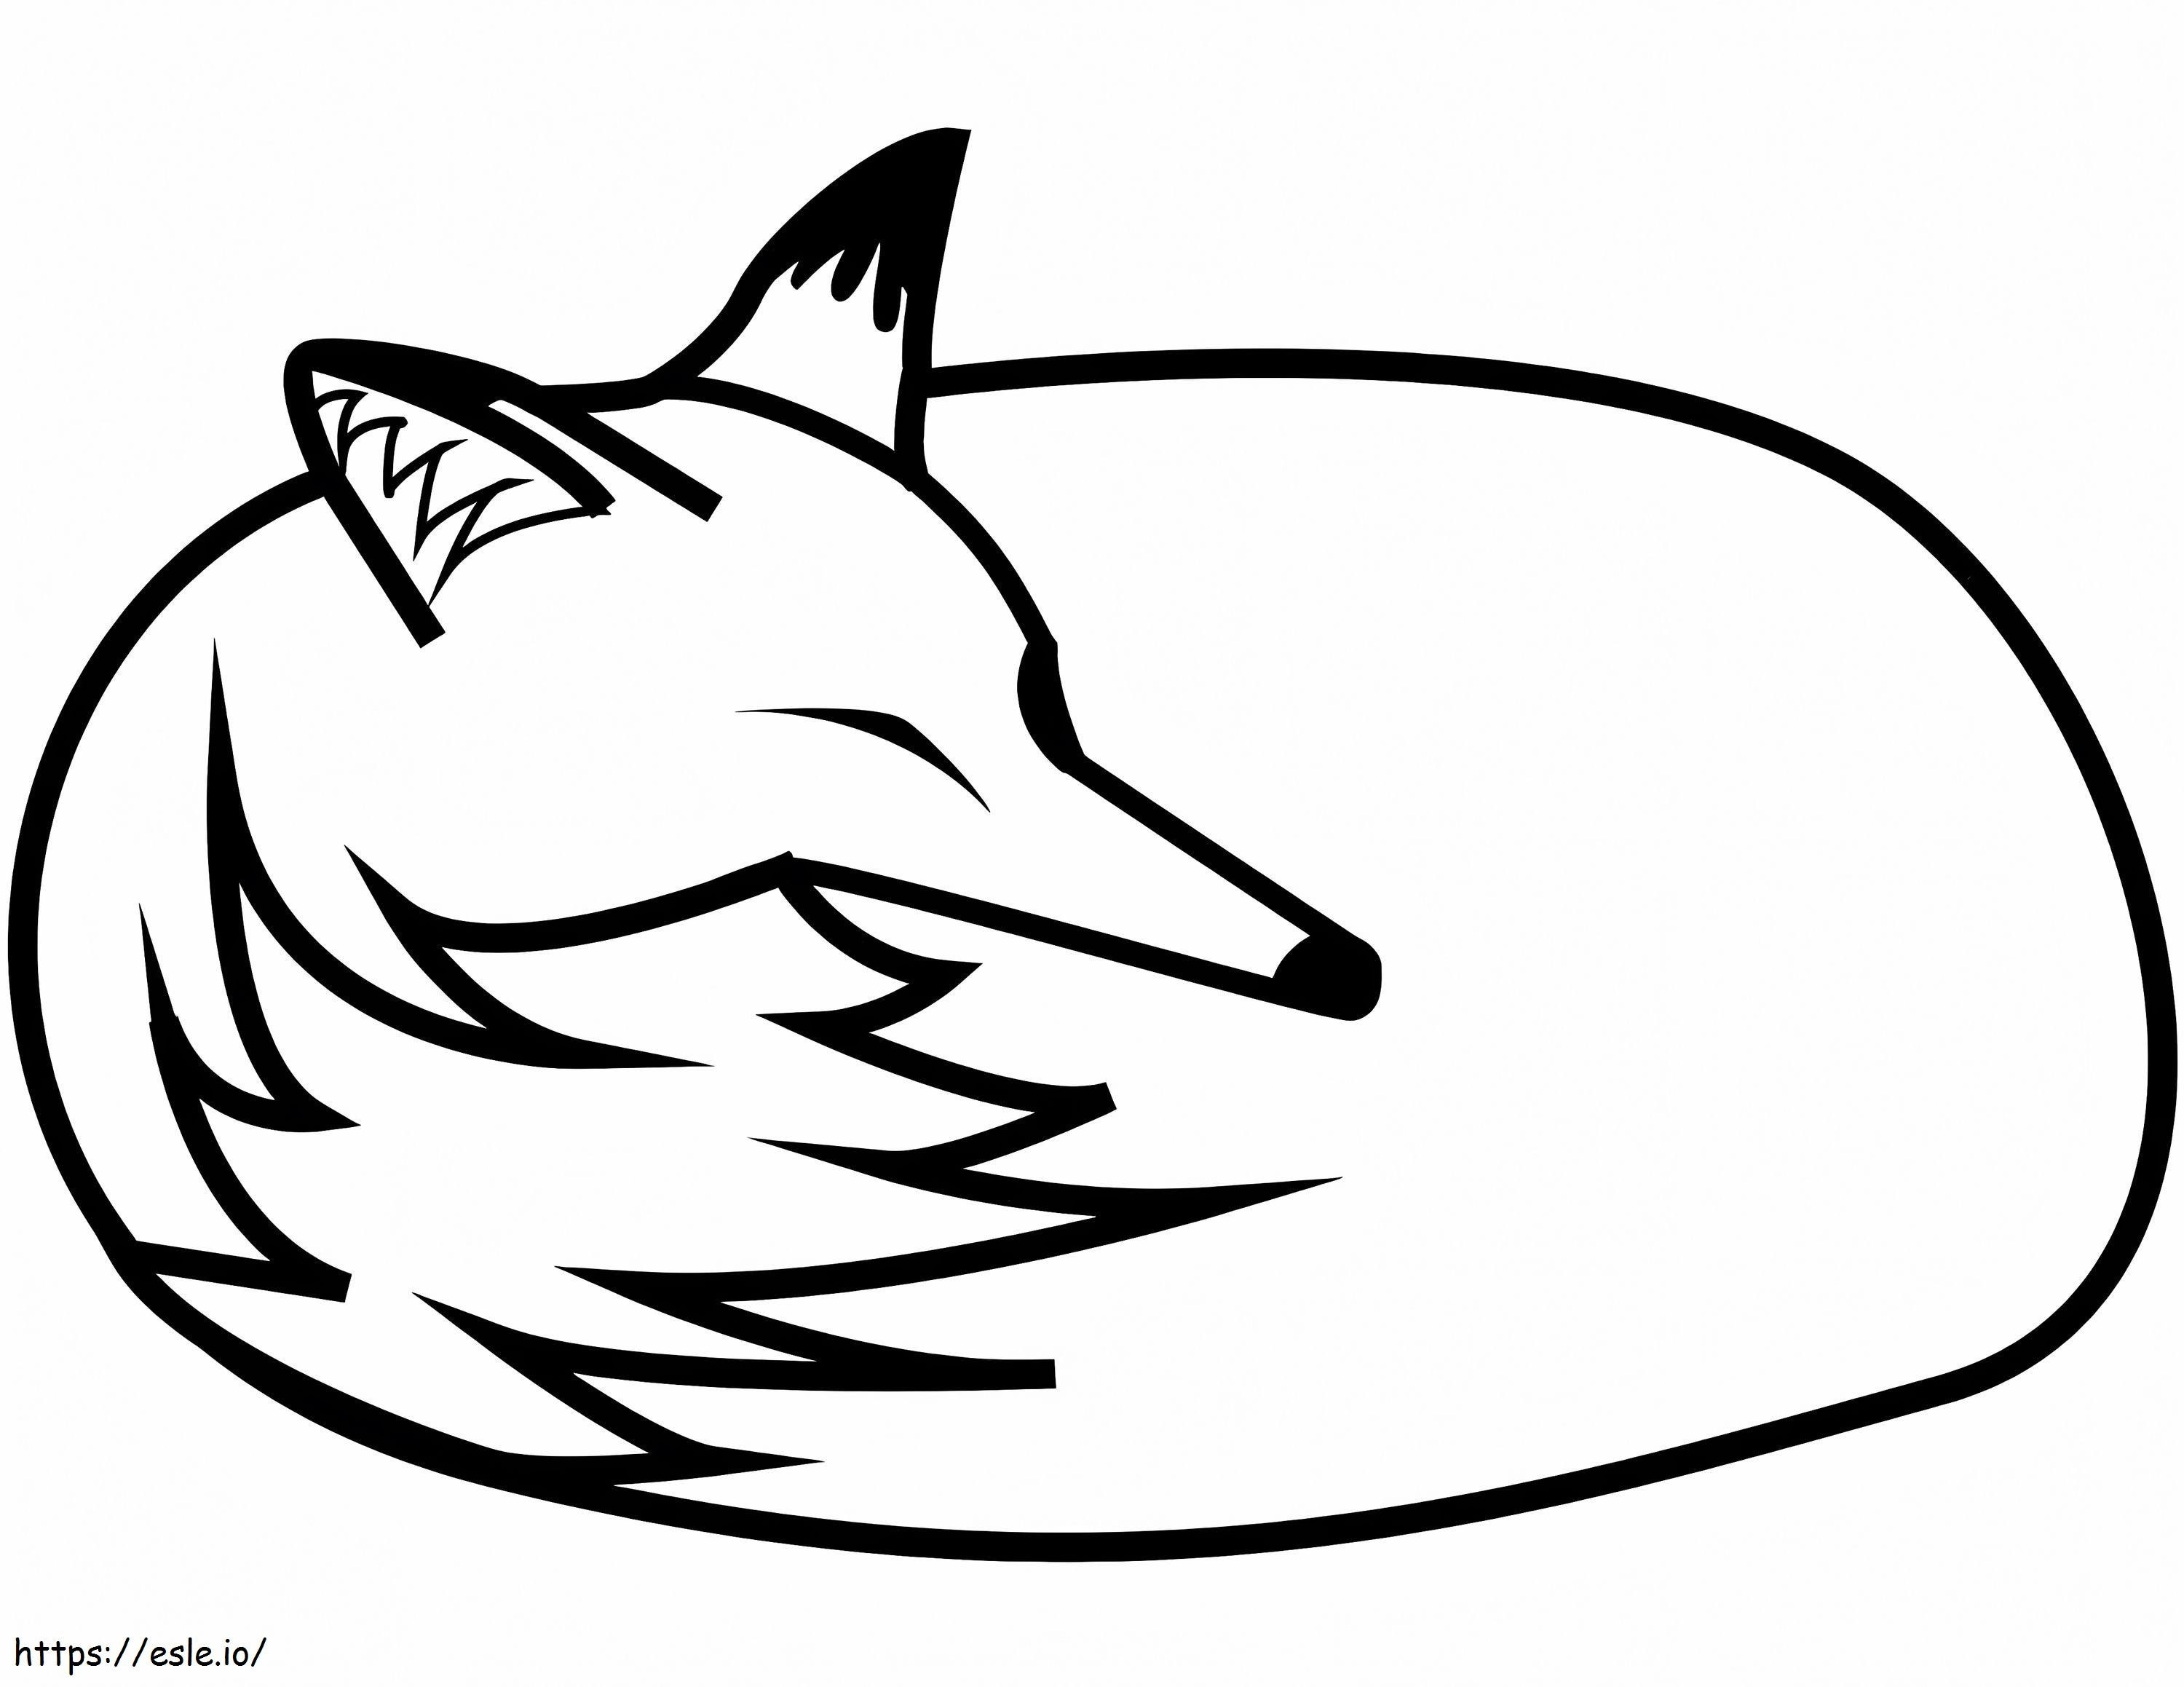 Sleeping Fox coloring page